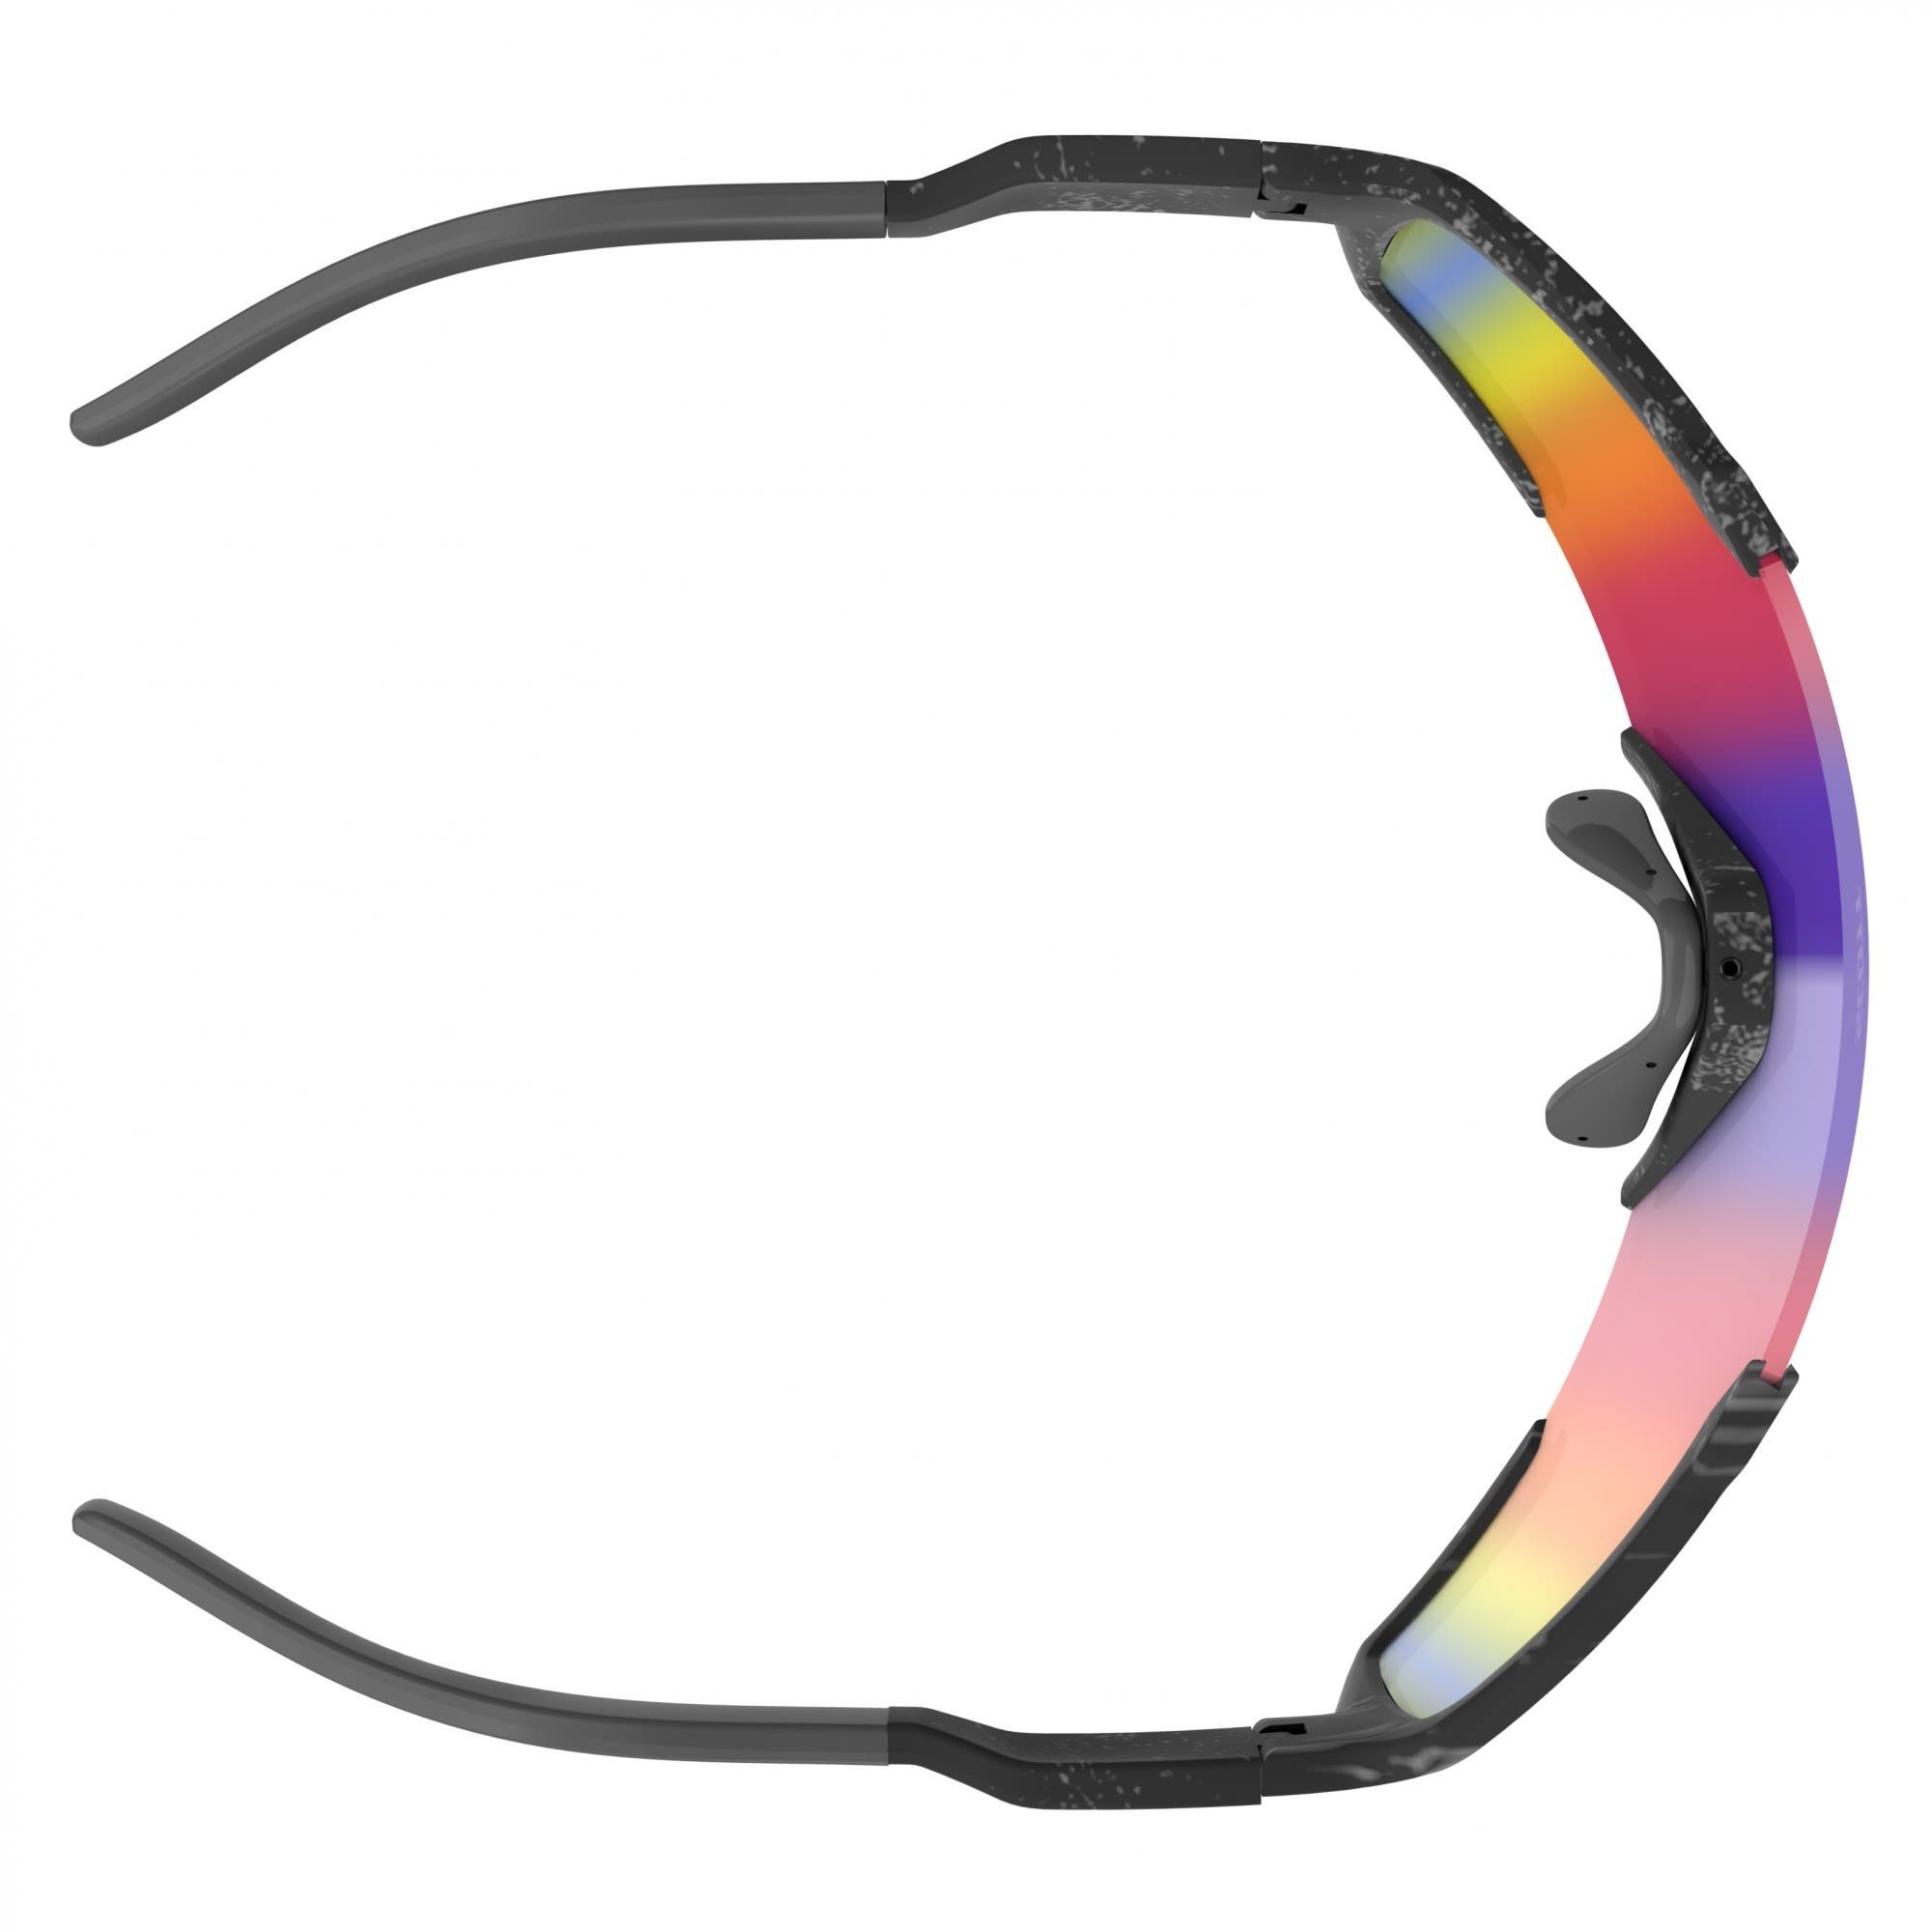 Scott Chrome Shield Scott Marble Black Accessoires - Teal Sunglasses Compact Fahrradbrille